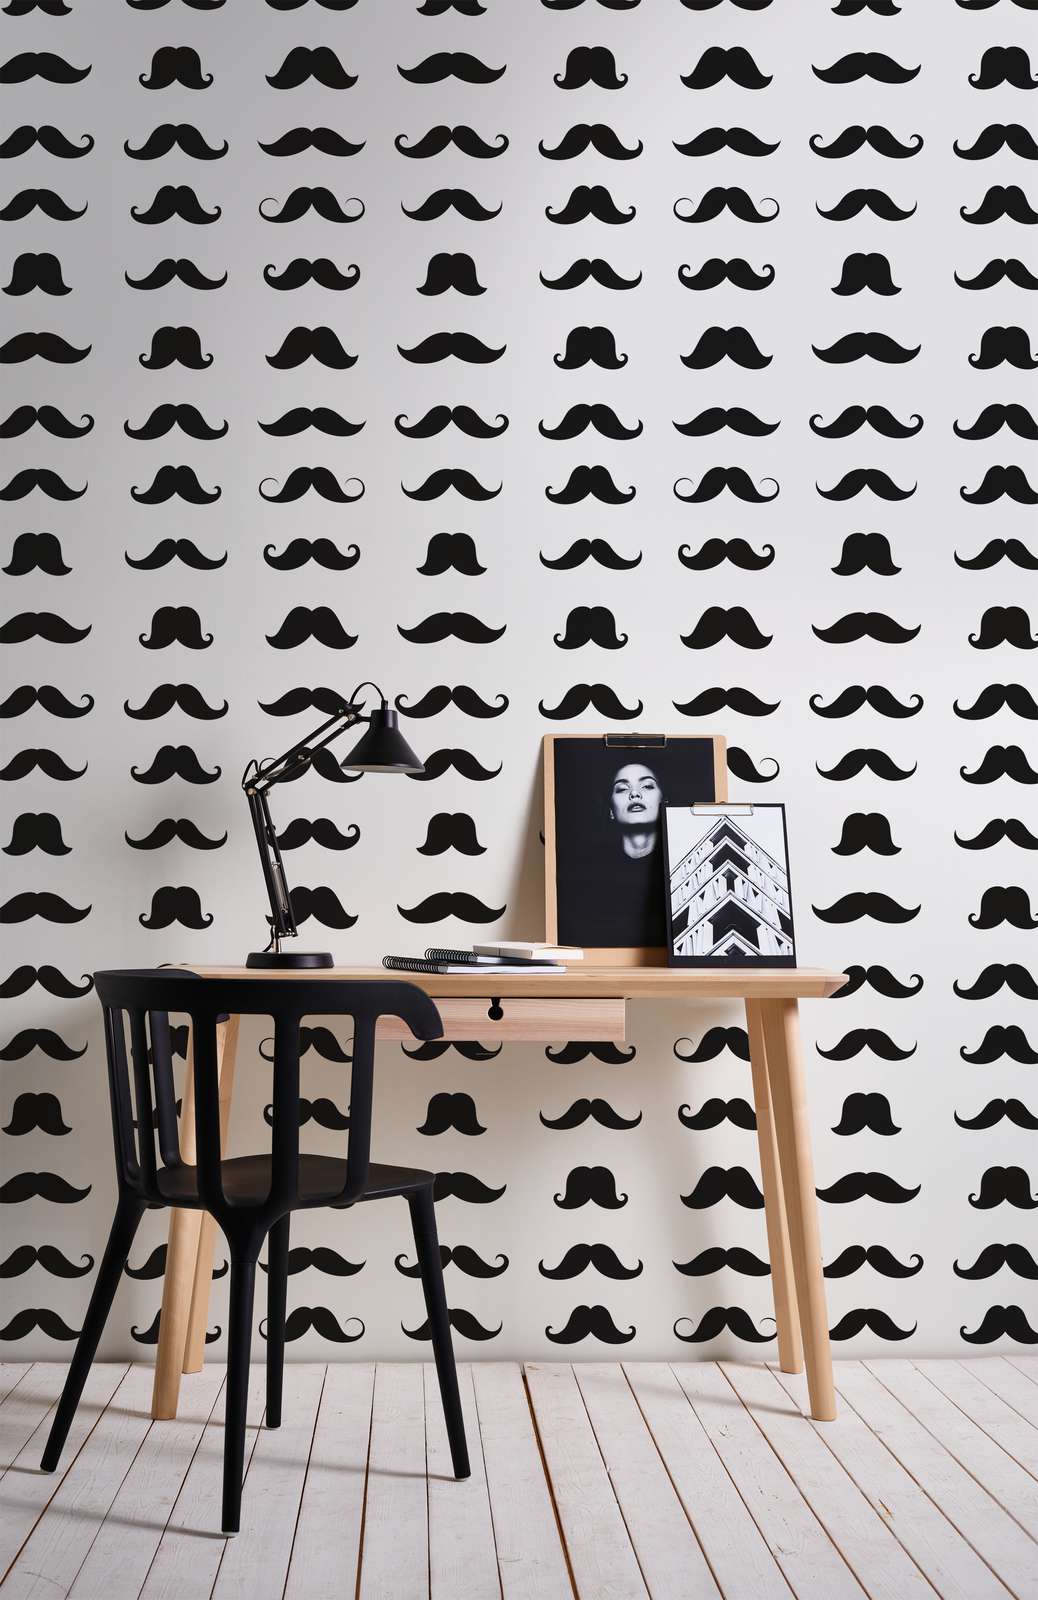             Photo wallpaper Mustache cool moustache motif - Black and white - Matt smooth fleece
        